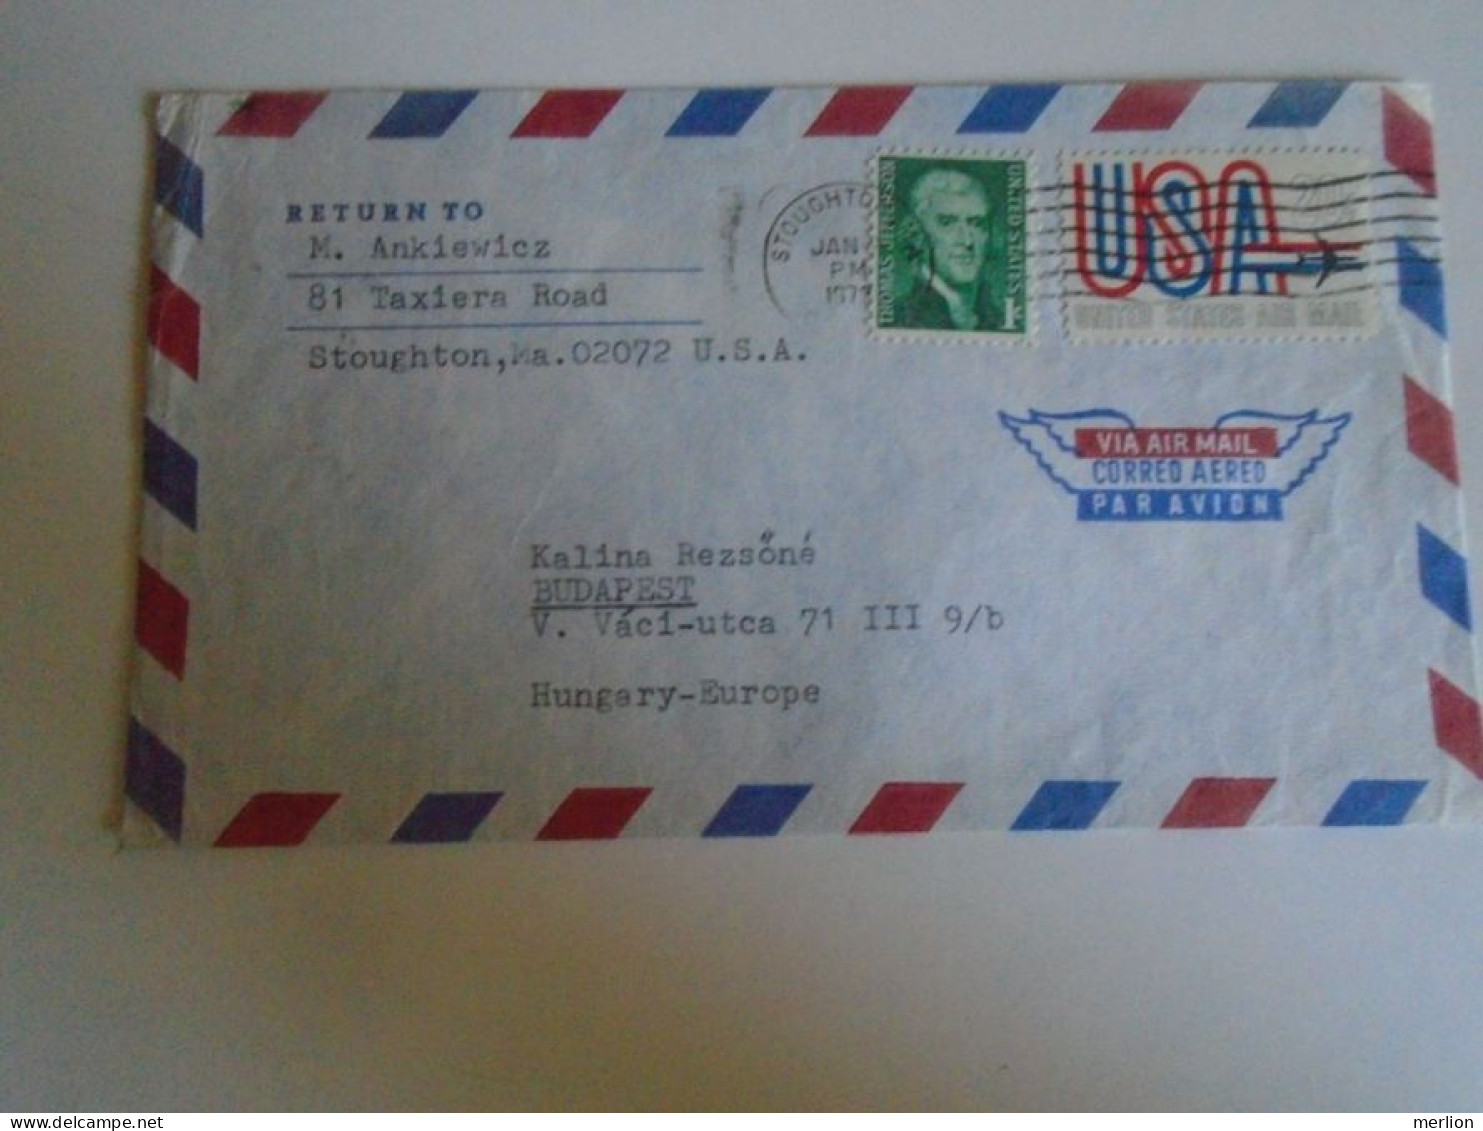 ZA490.25  USA Airmail Cover  1972 Stoughton Ma.   Ankiewicz  Sent To Hungary - Briefe U. Dokumente